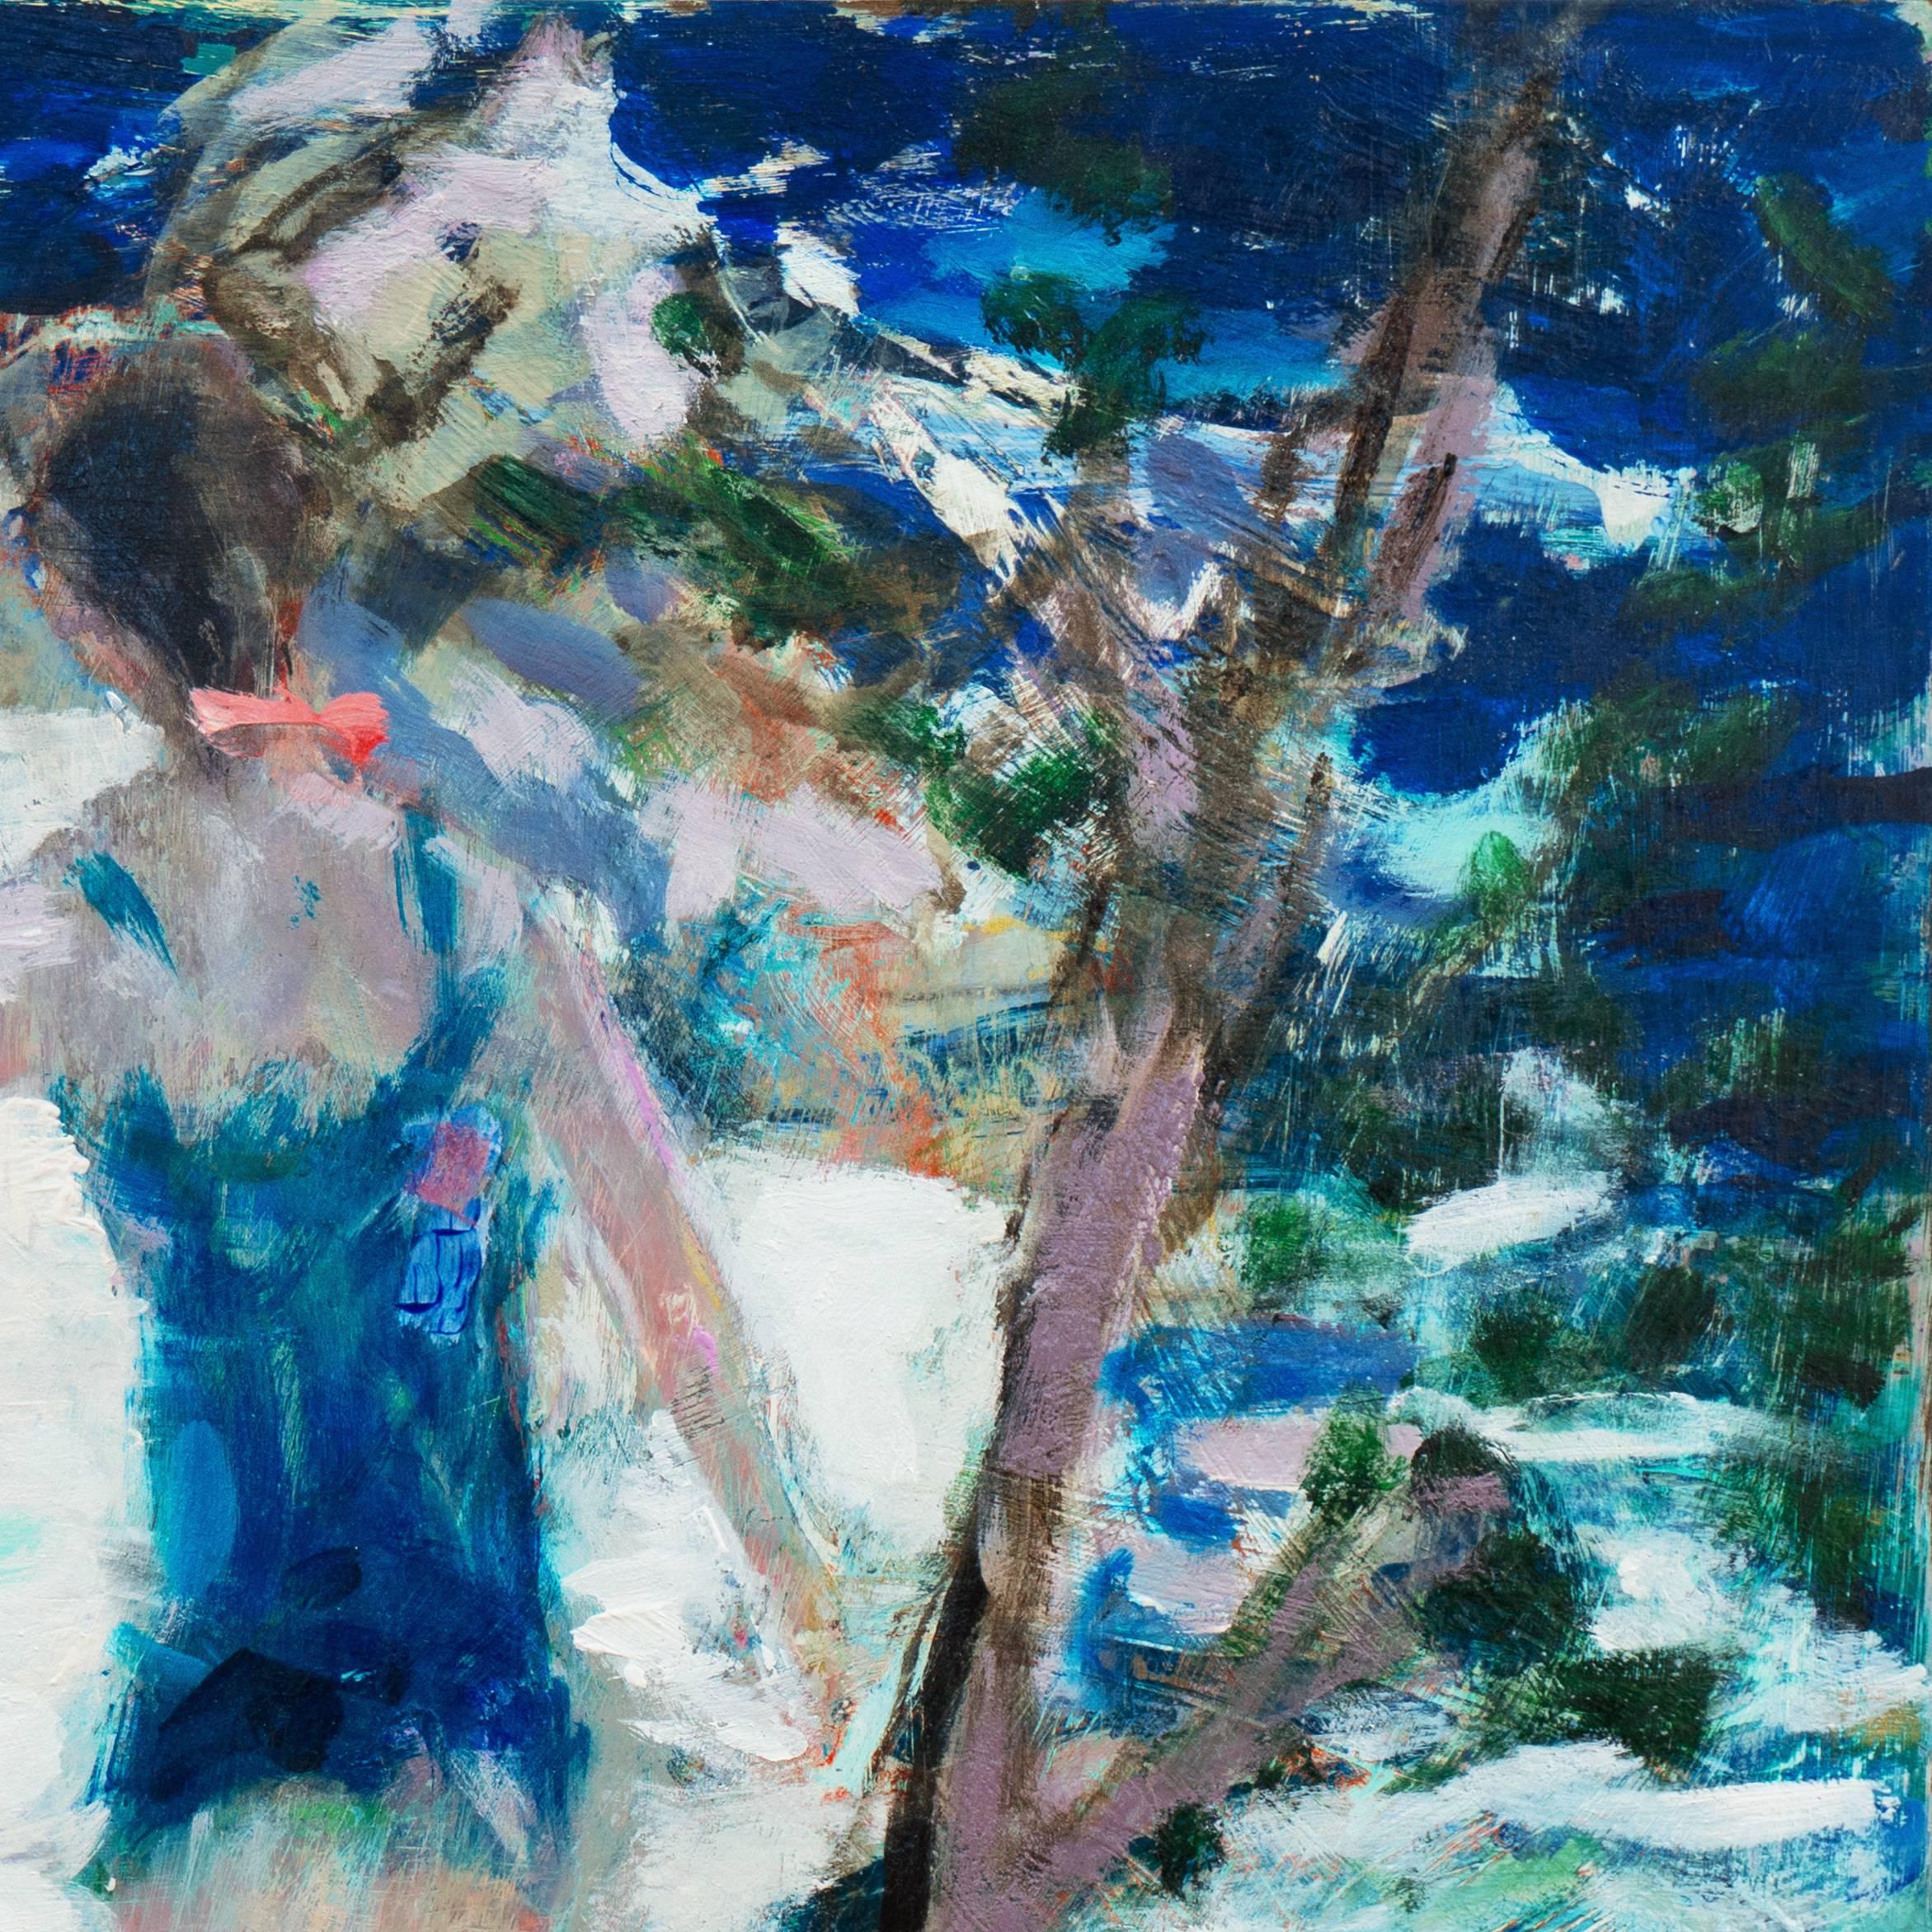 'Young Woman Bathing, Carmel', California Post-Impressionist, Stanford, Big Sur 1